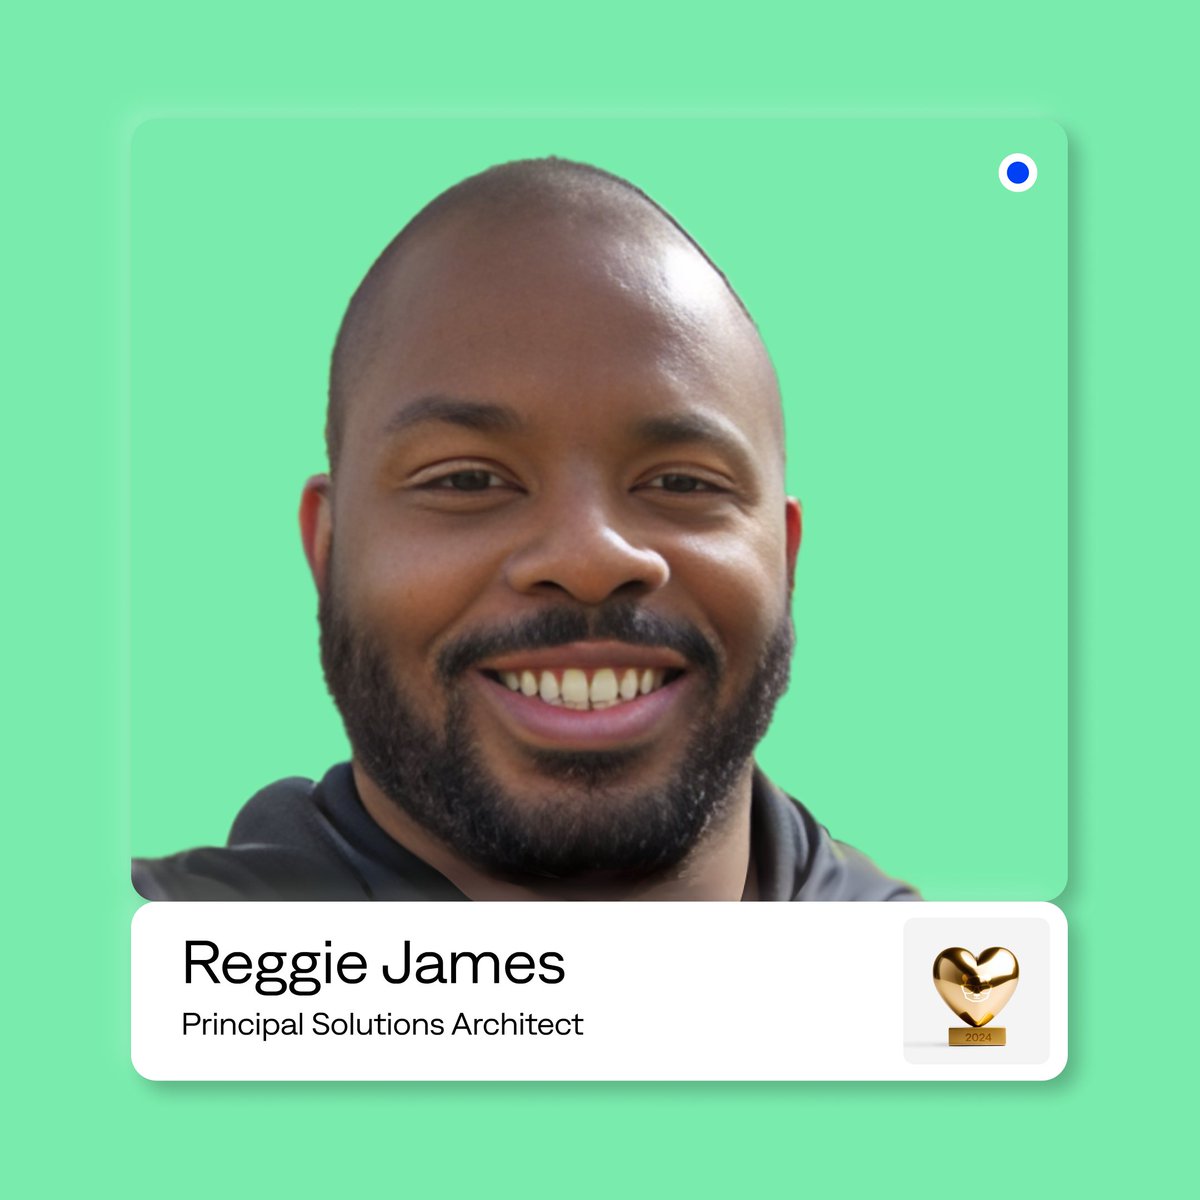 Meet Reggie James. Reggie exemplifies relentless customer focus, helping organizations maximize the value of BigPanda. #employeerecognition
bit.ly/3ysJTFi